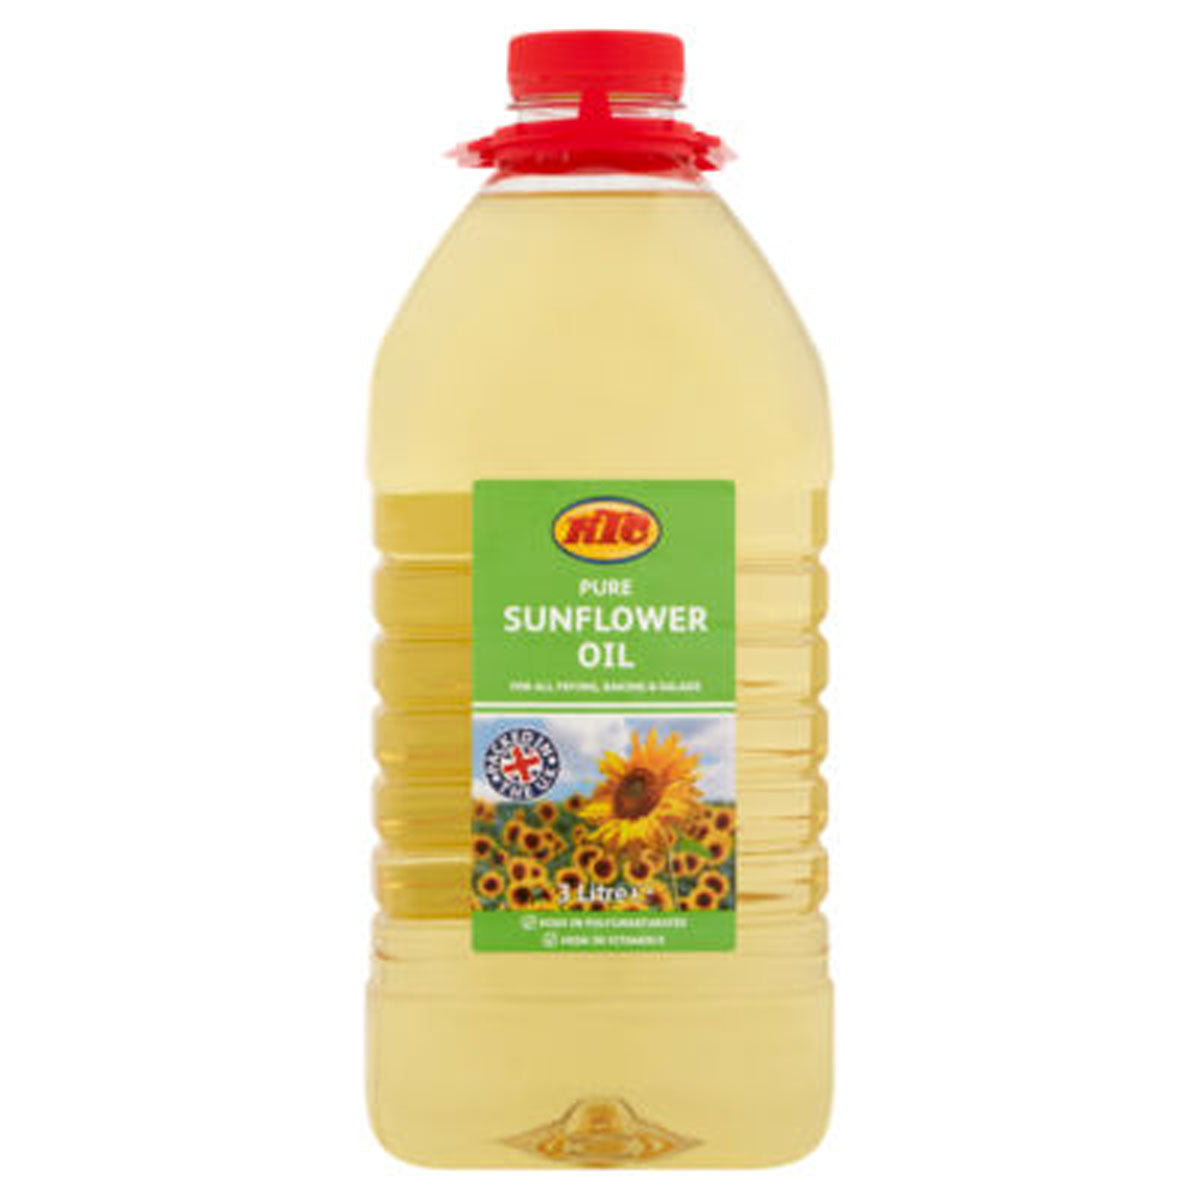 KTC - Pure Sunflower Oil - 3L - Continental Food Store